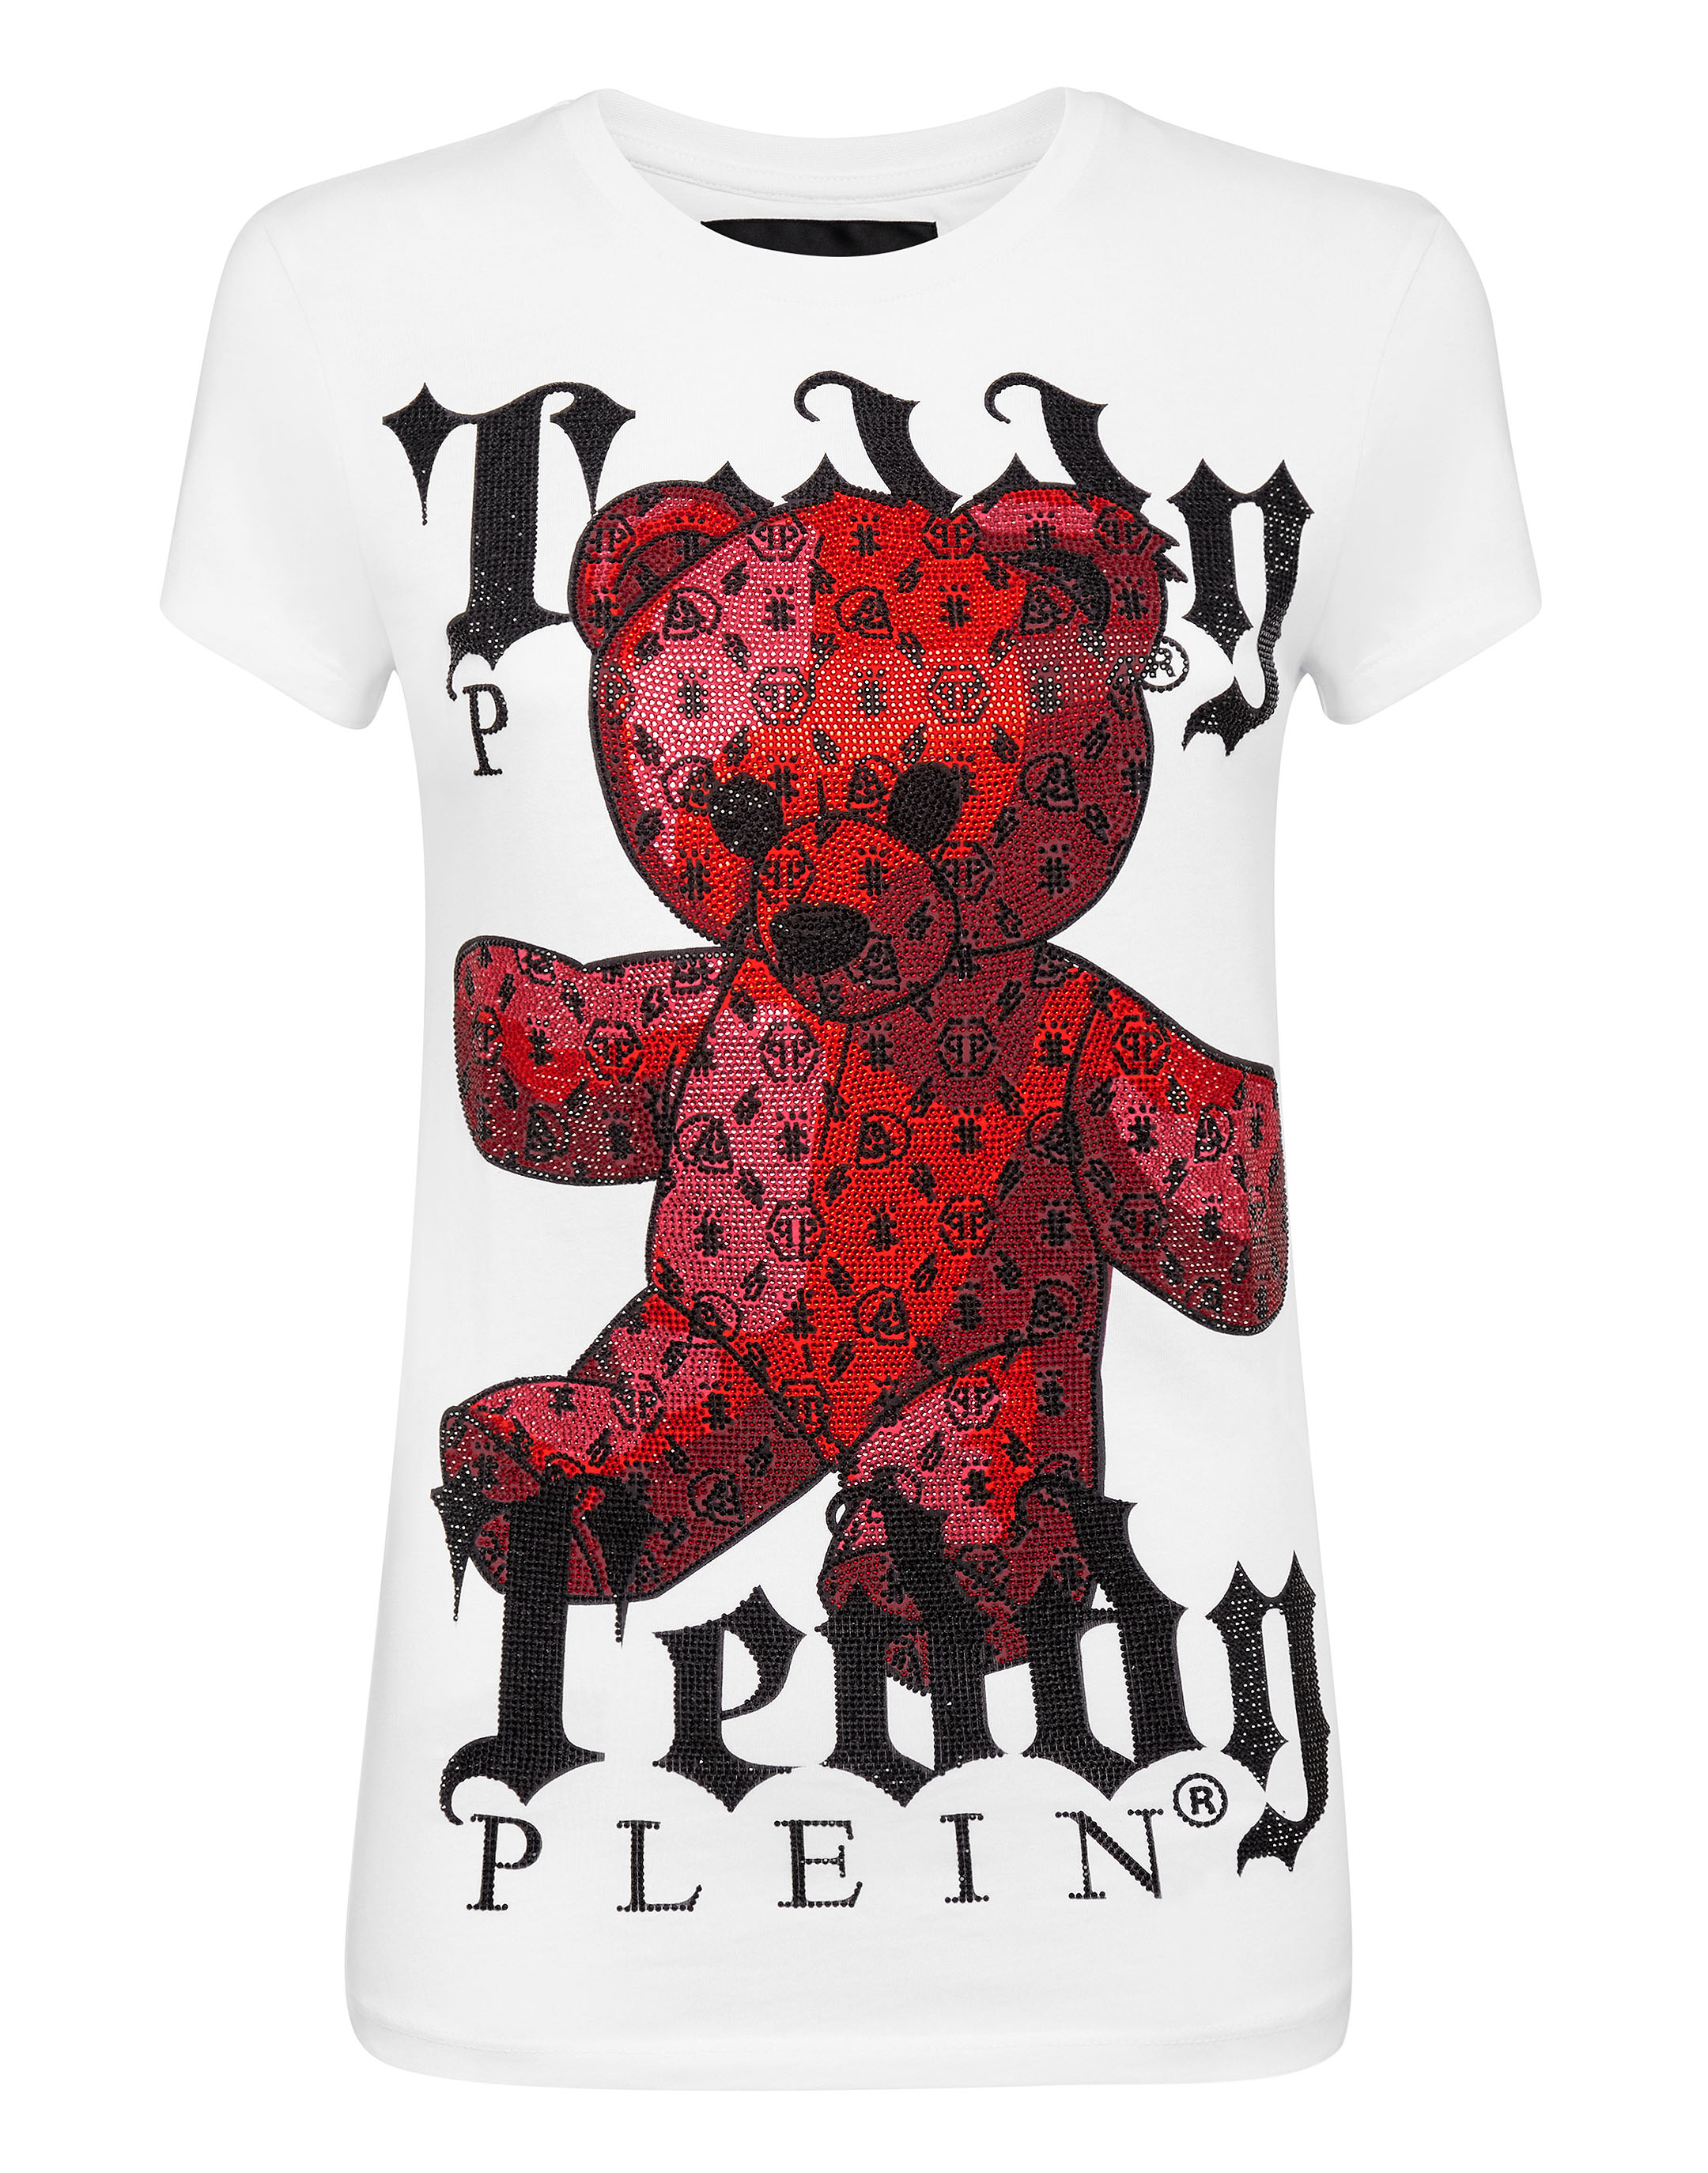 philipp plein teddy bear t shirt